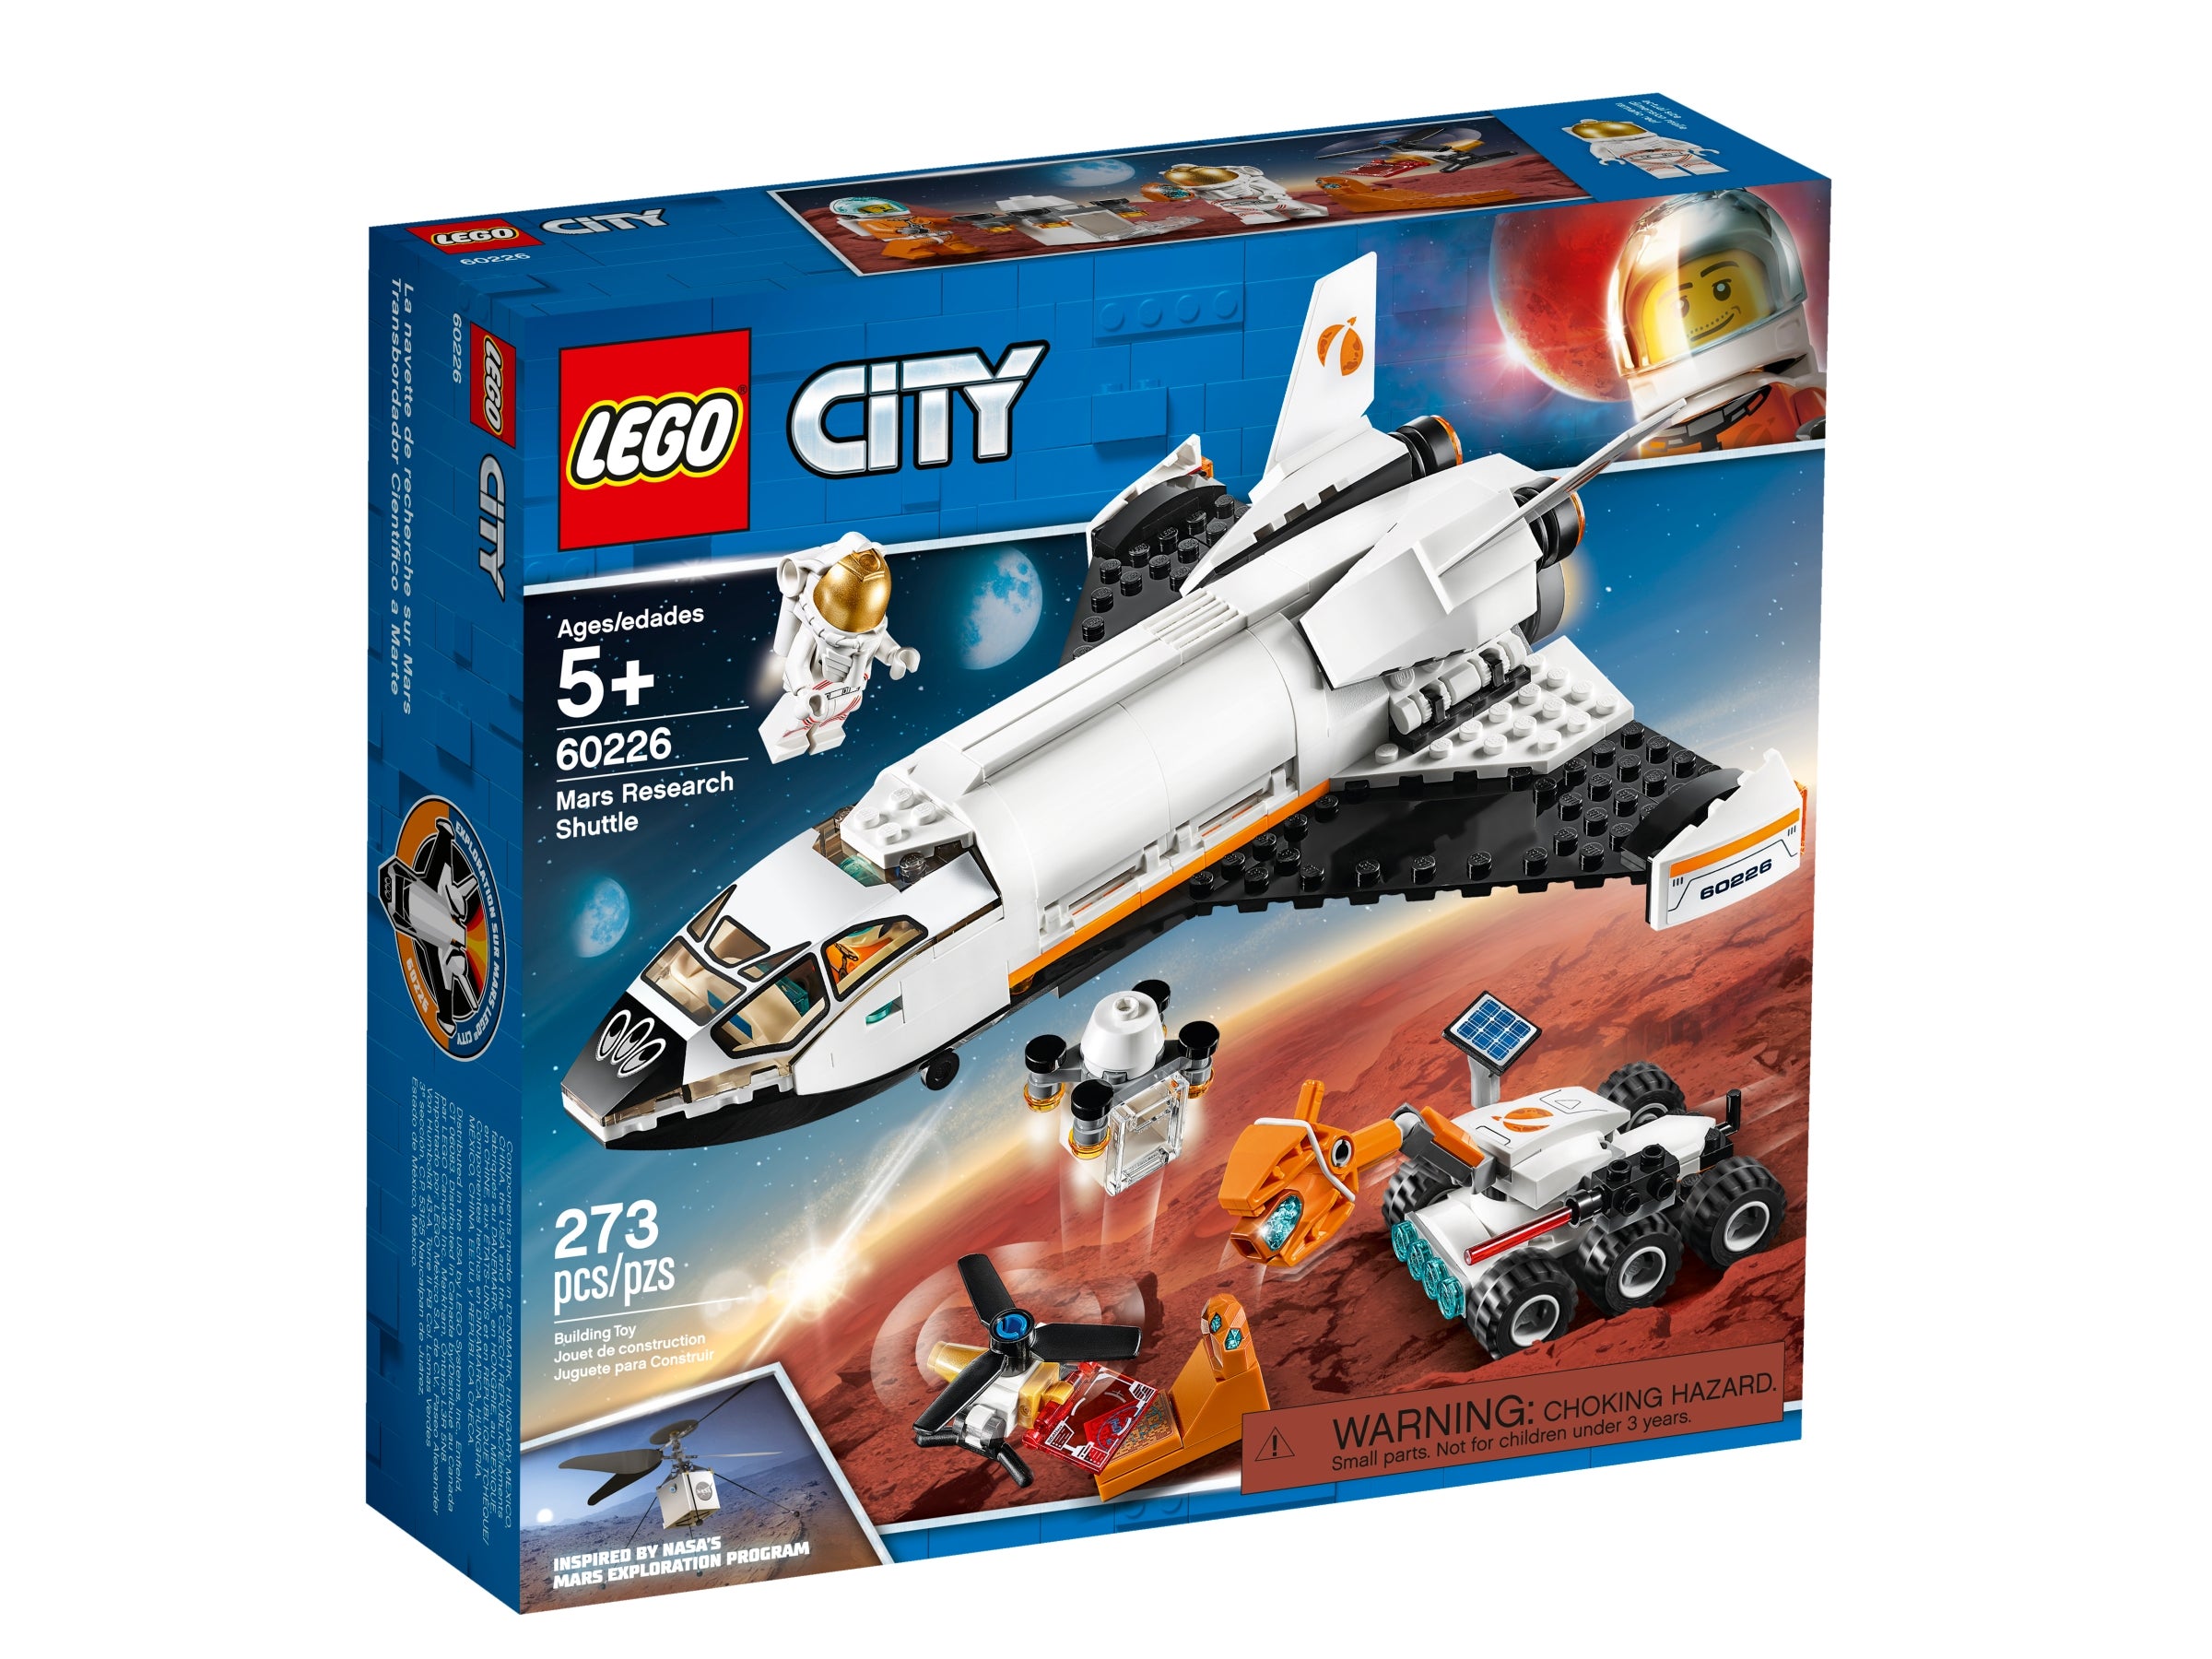 SHUTTLE DI RICERCA SU MARTE LEGO CITY SPACE PORT 60226